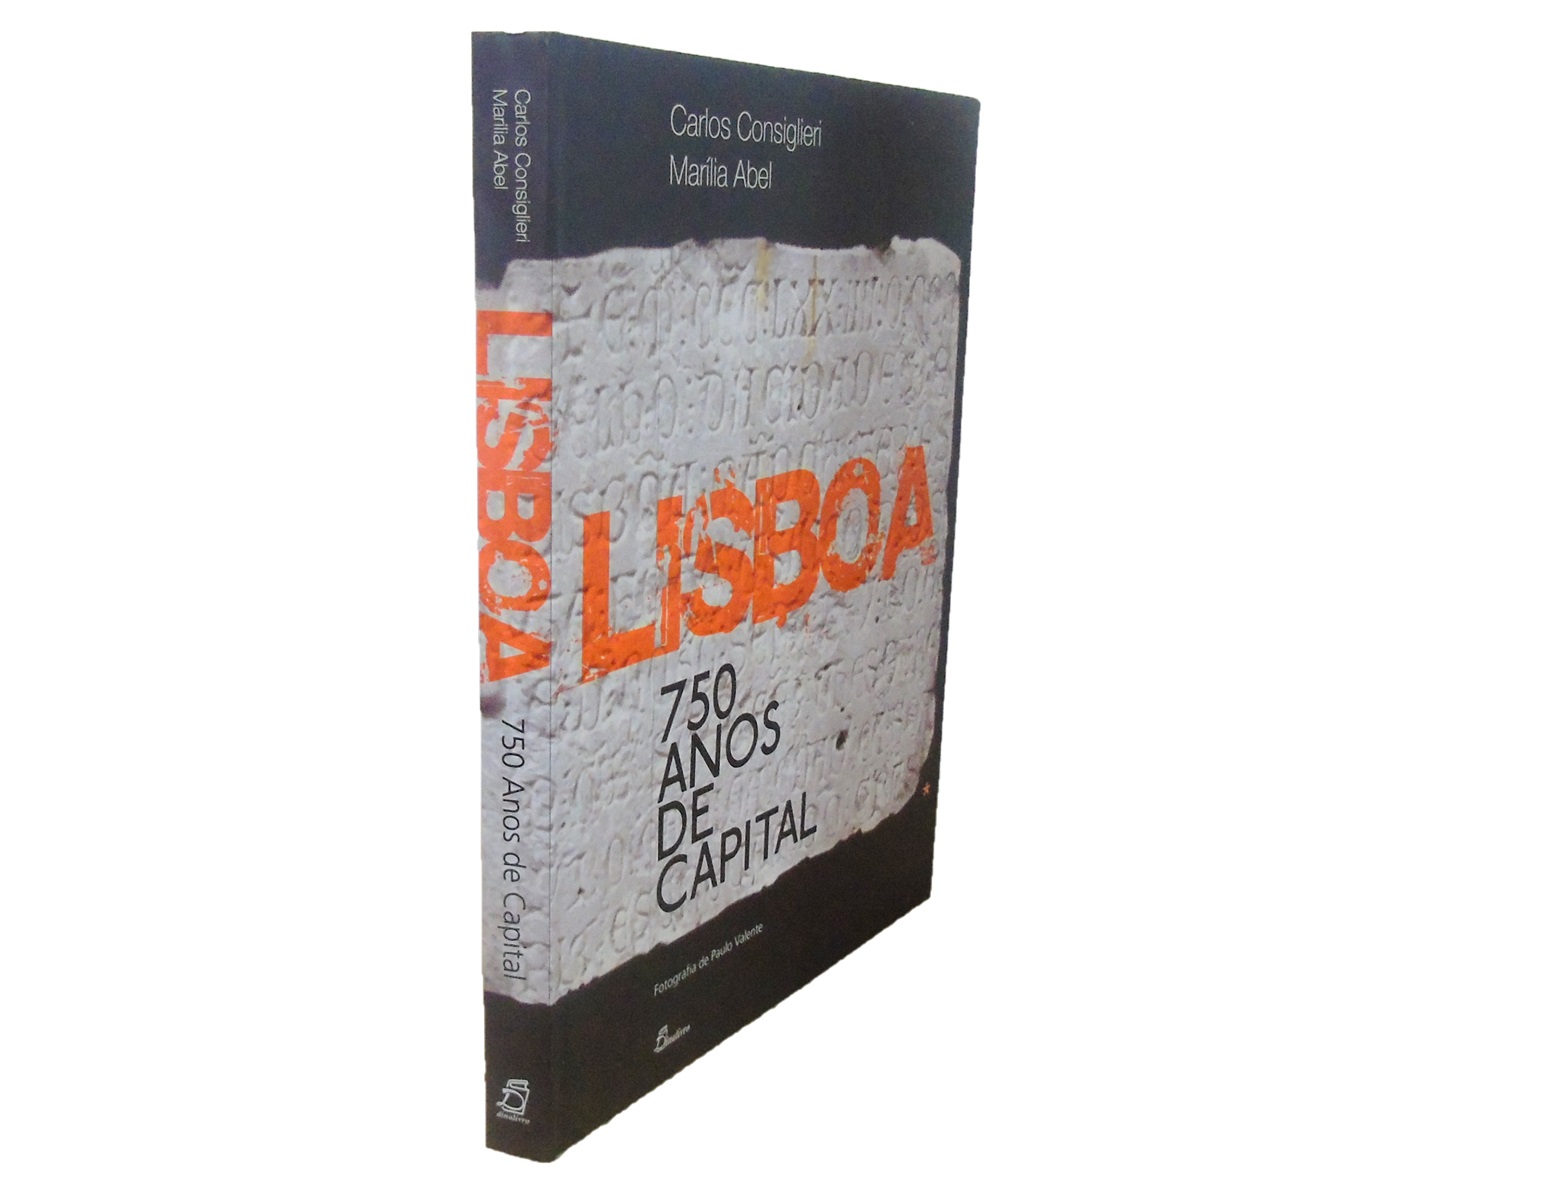  Lisboa: 750 Anos de Capital.